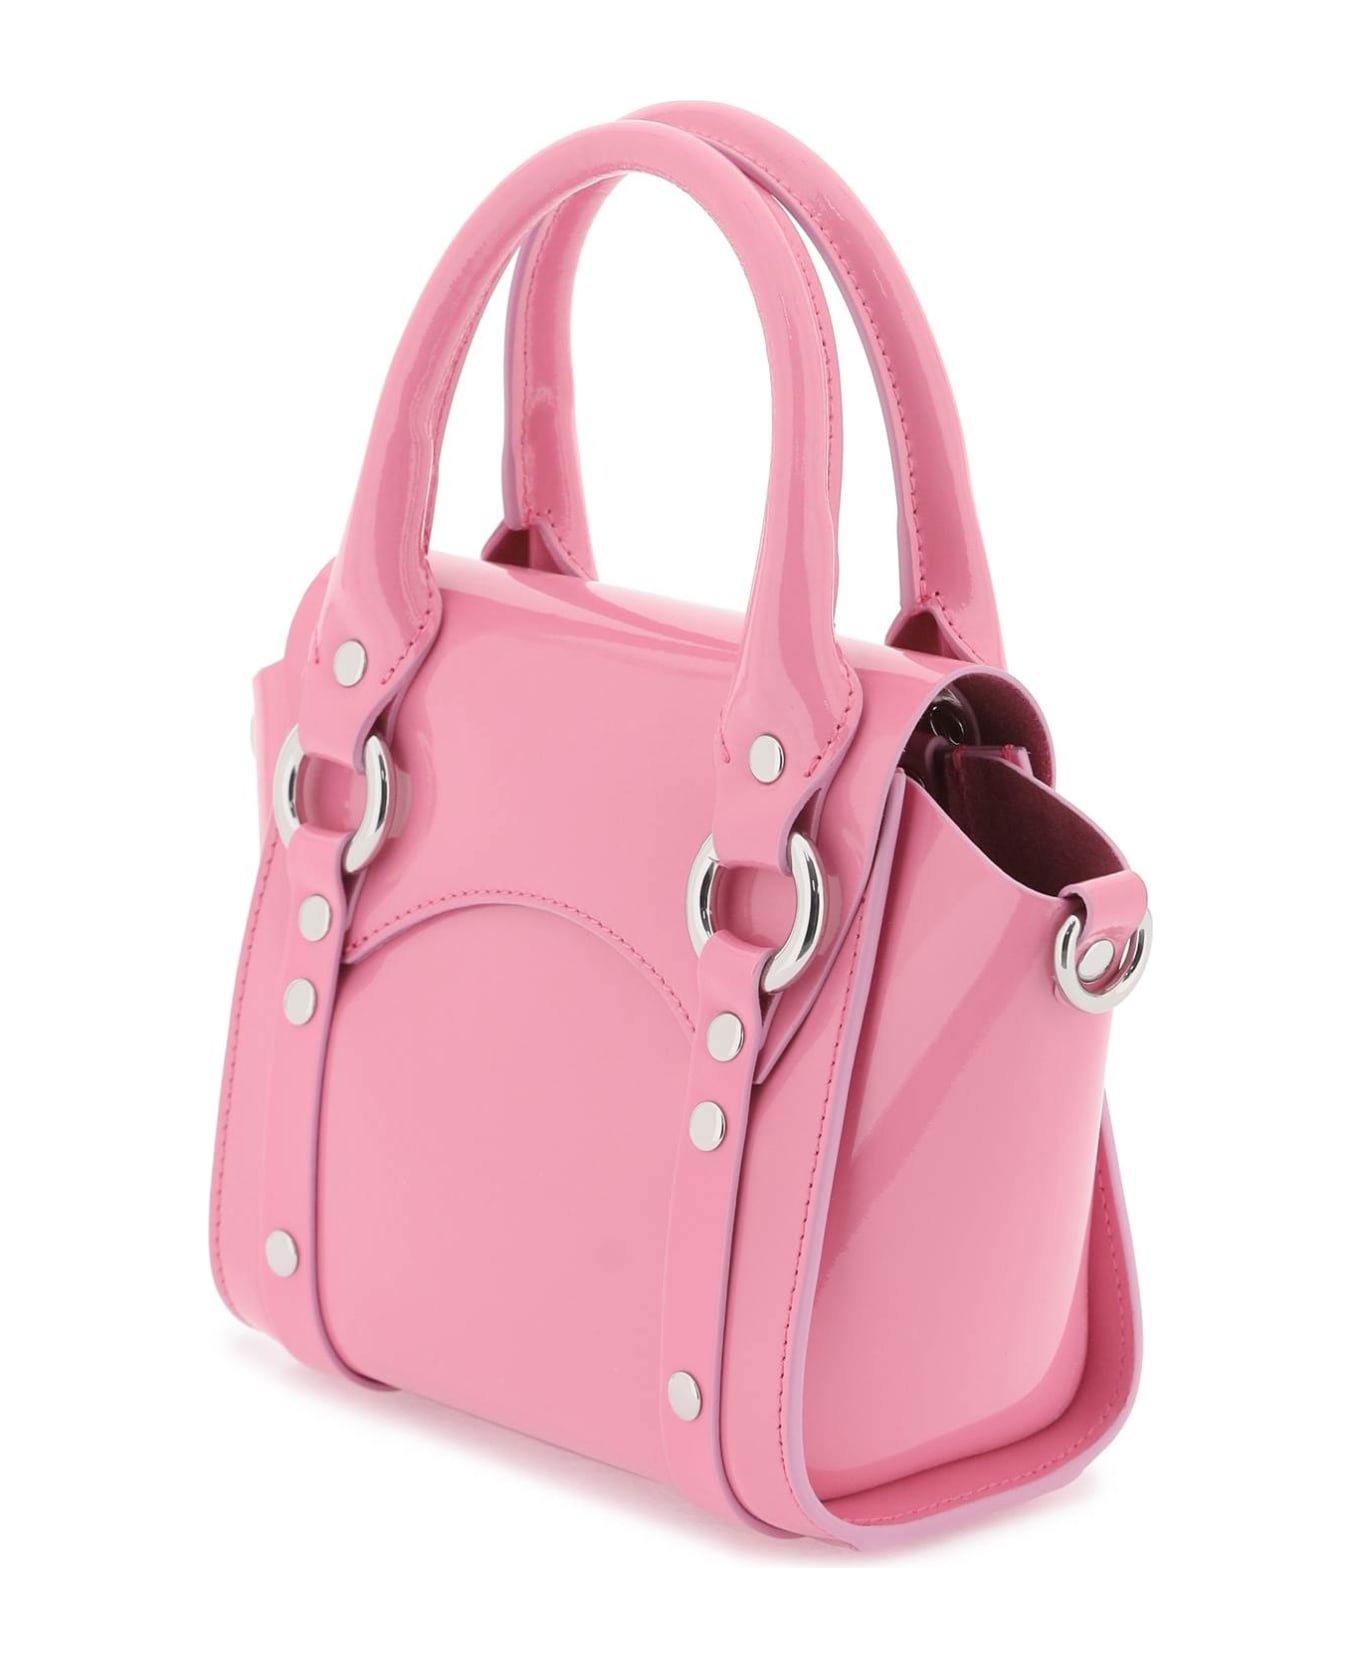 Vivienne Westwood Betty Mini Handbag - PINK (Pink)